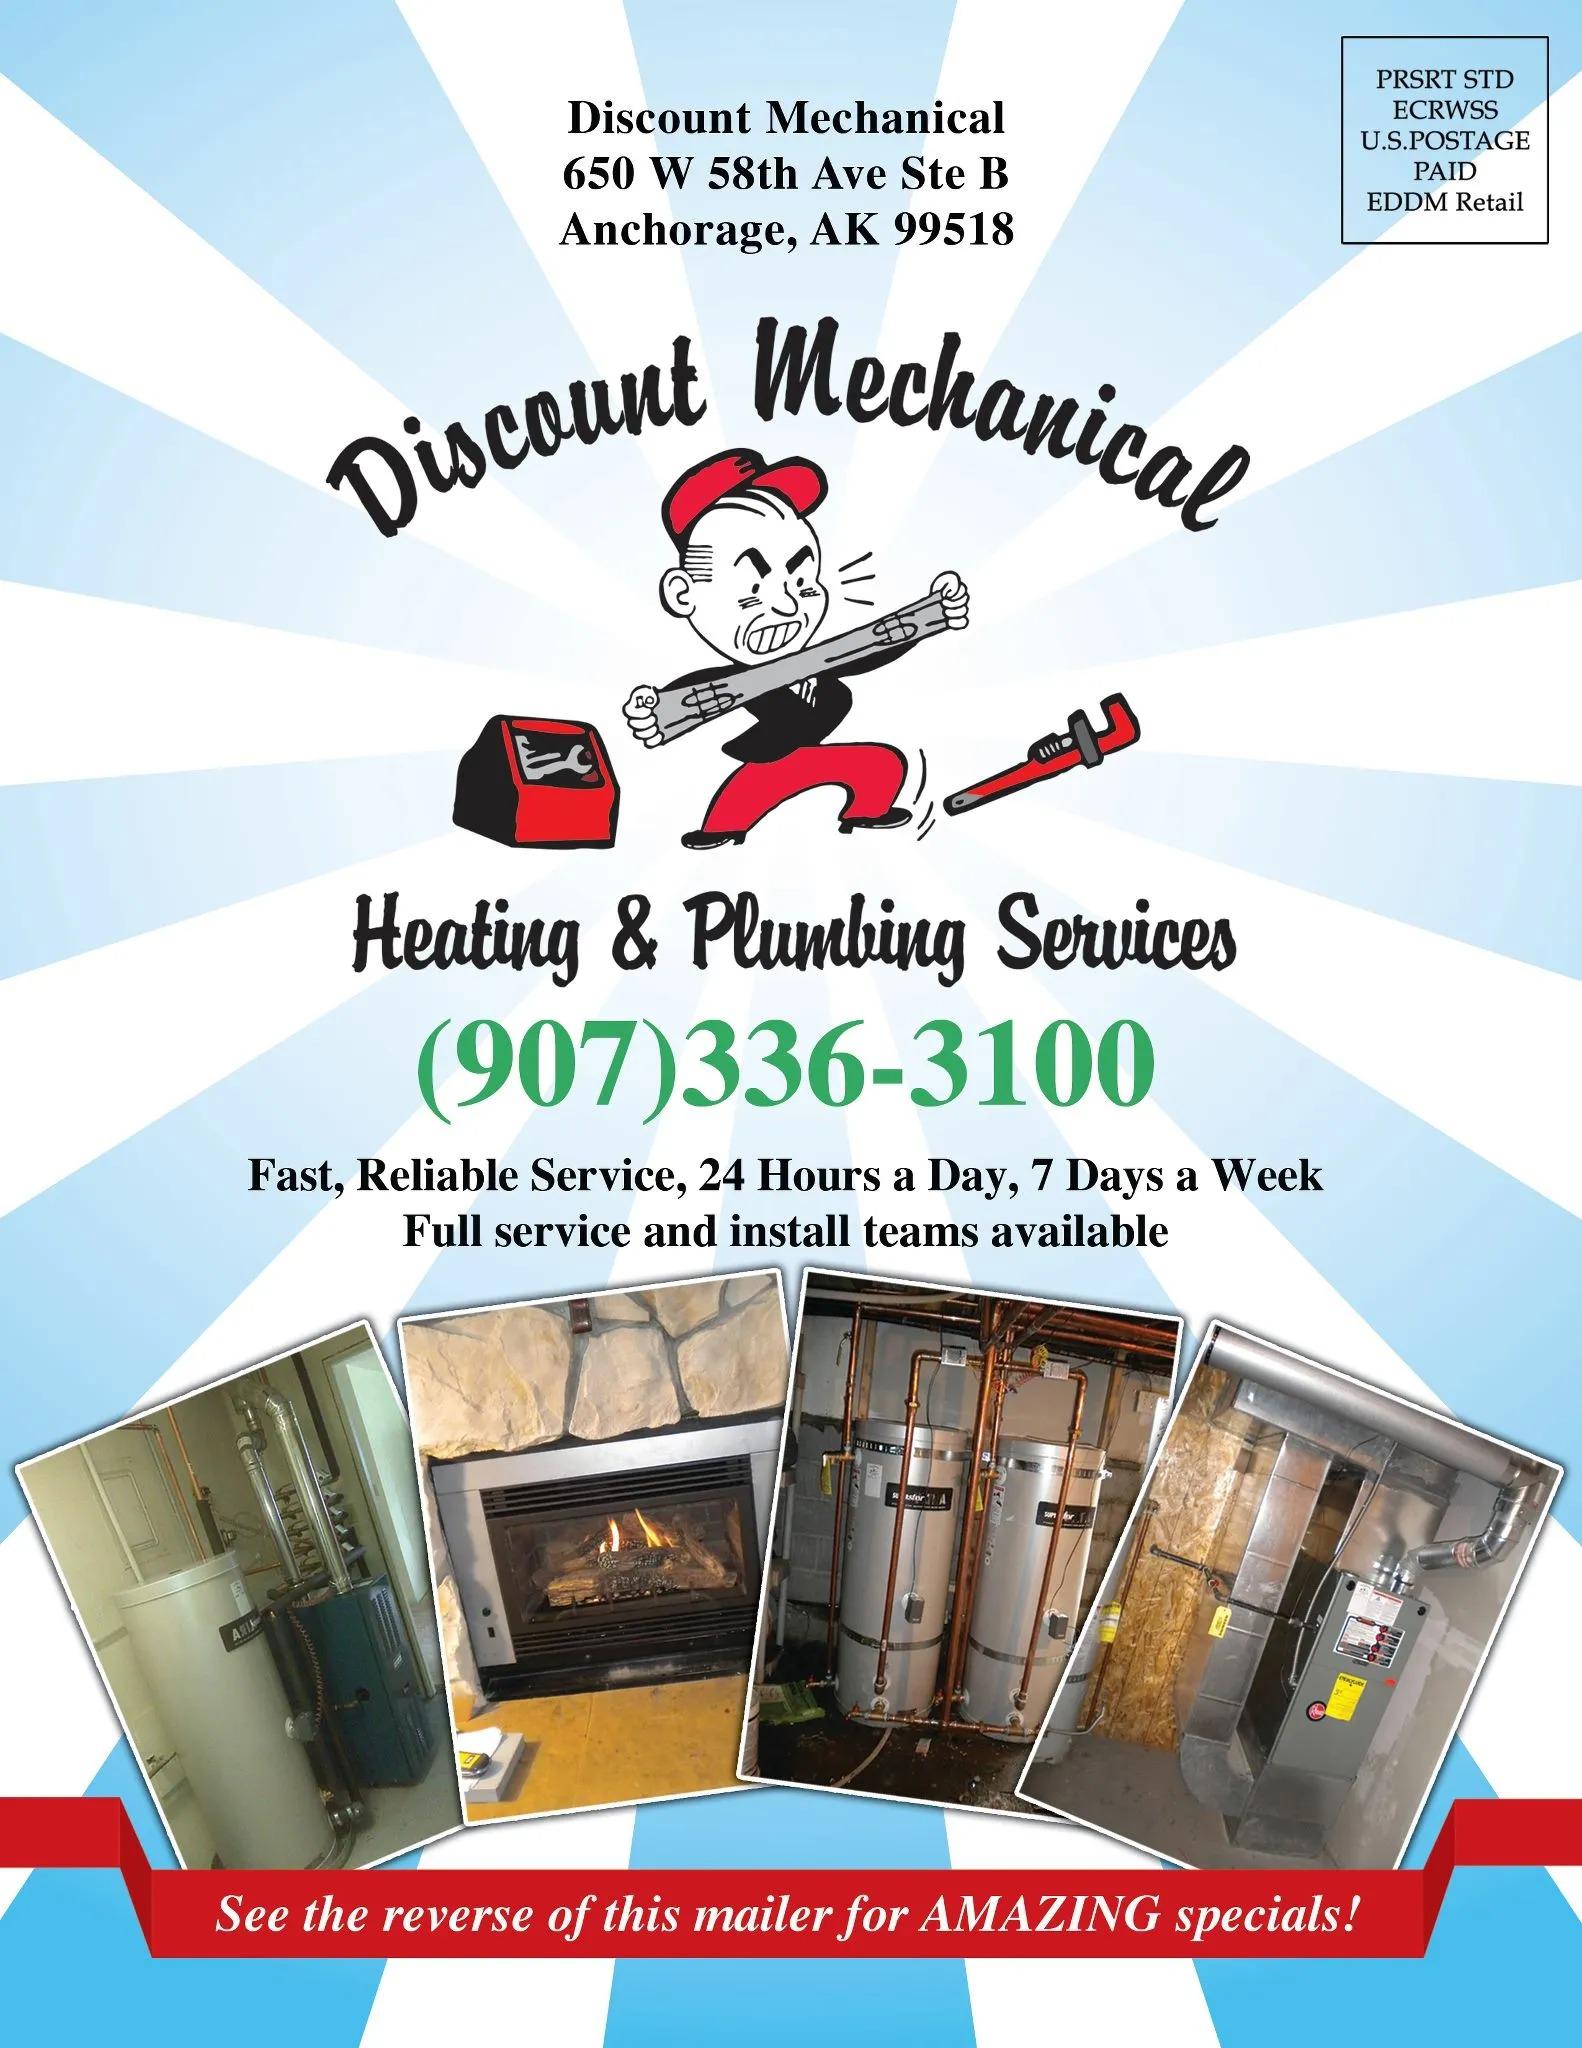 Discount Mechanical Heating and Plumbing